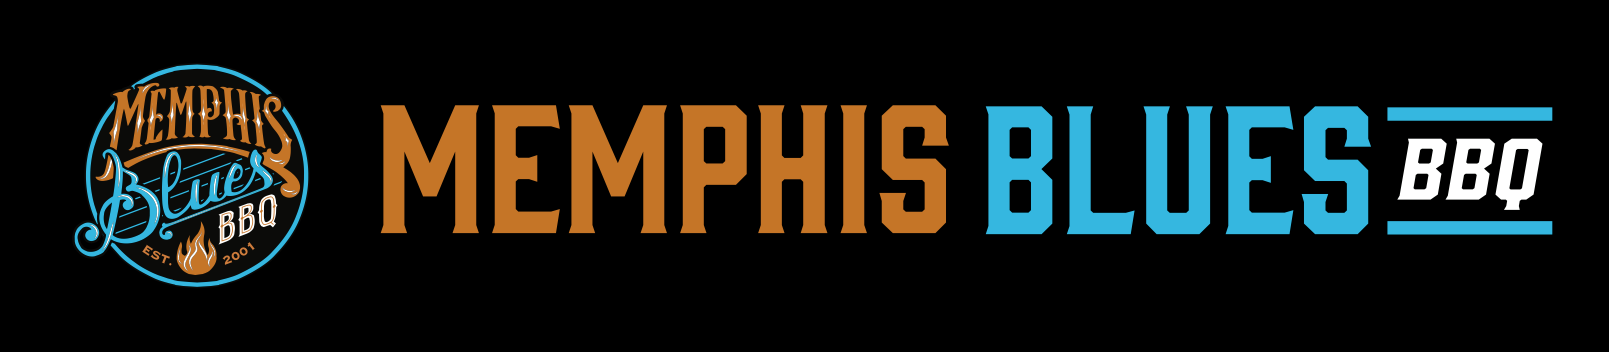 Memphis-blues-bbq